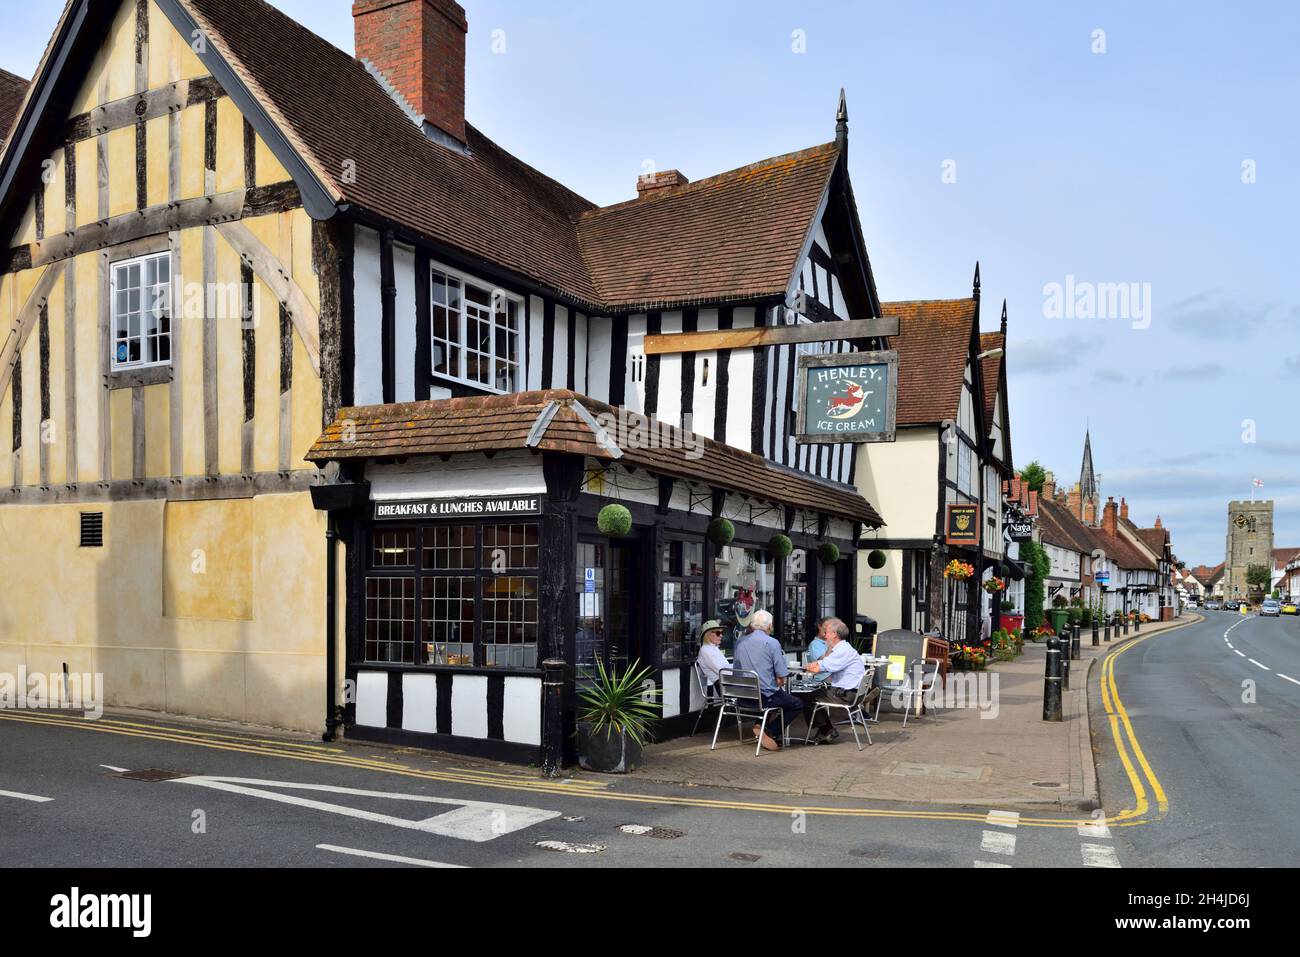 Henley-in-Arden high street with historic Henley Ice Cream shop, Warwickshire, UK Stock Photo